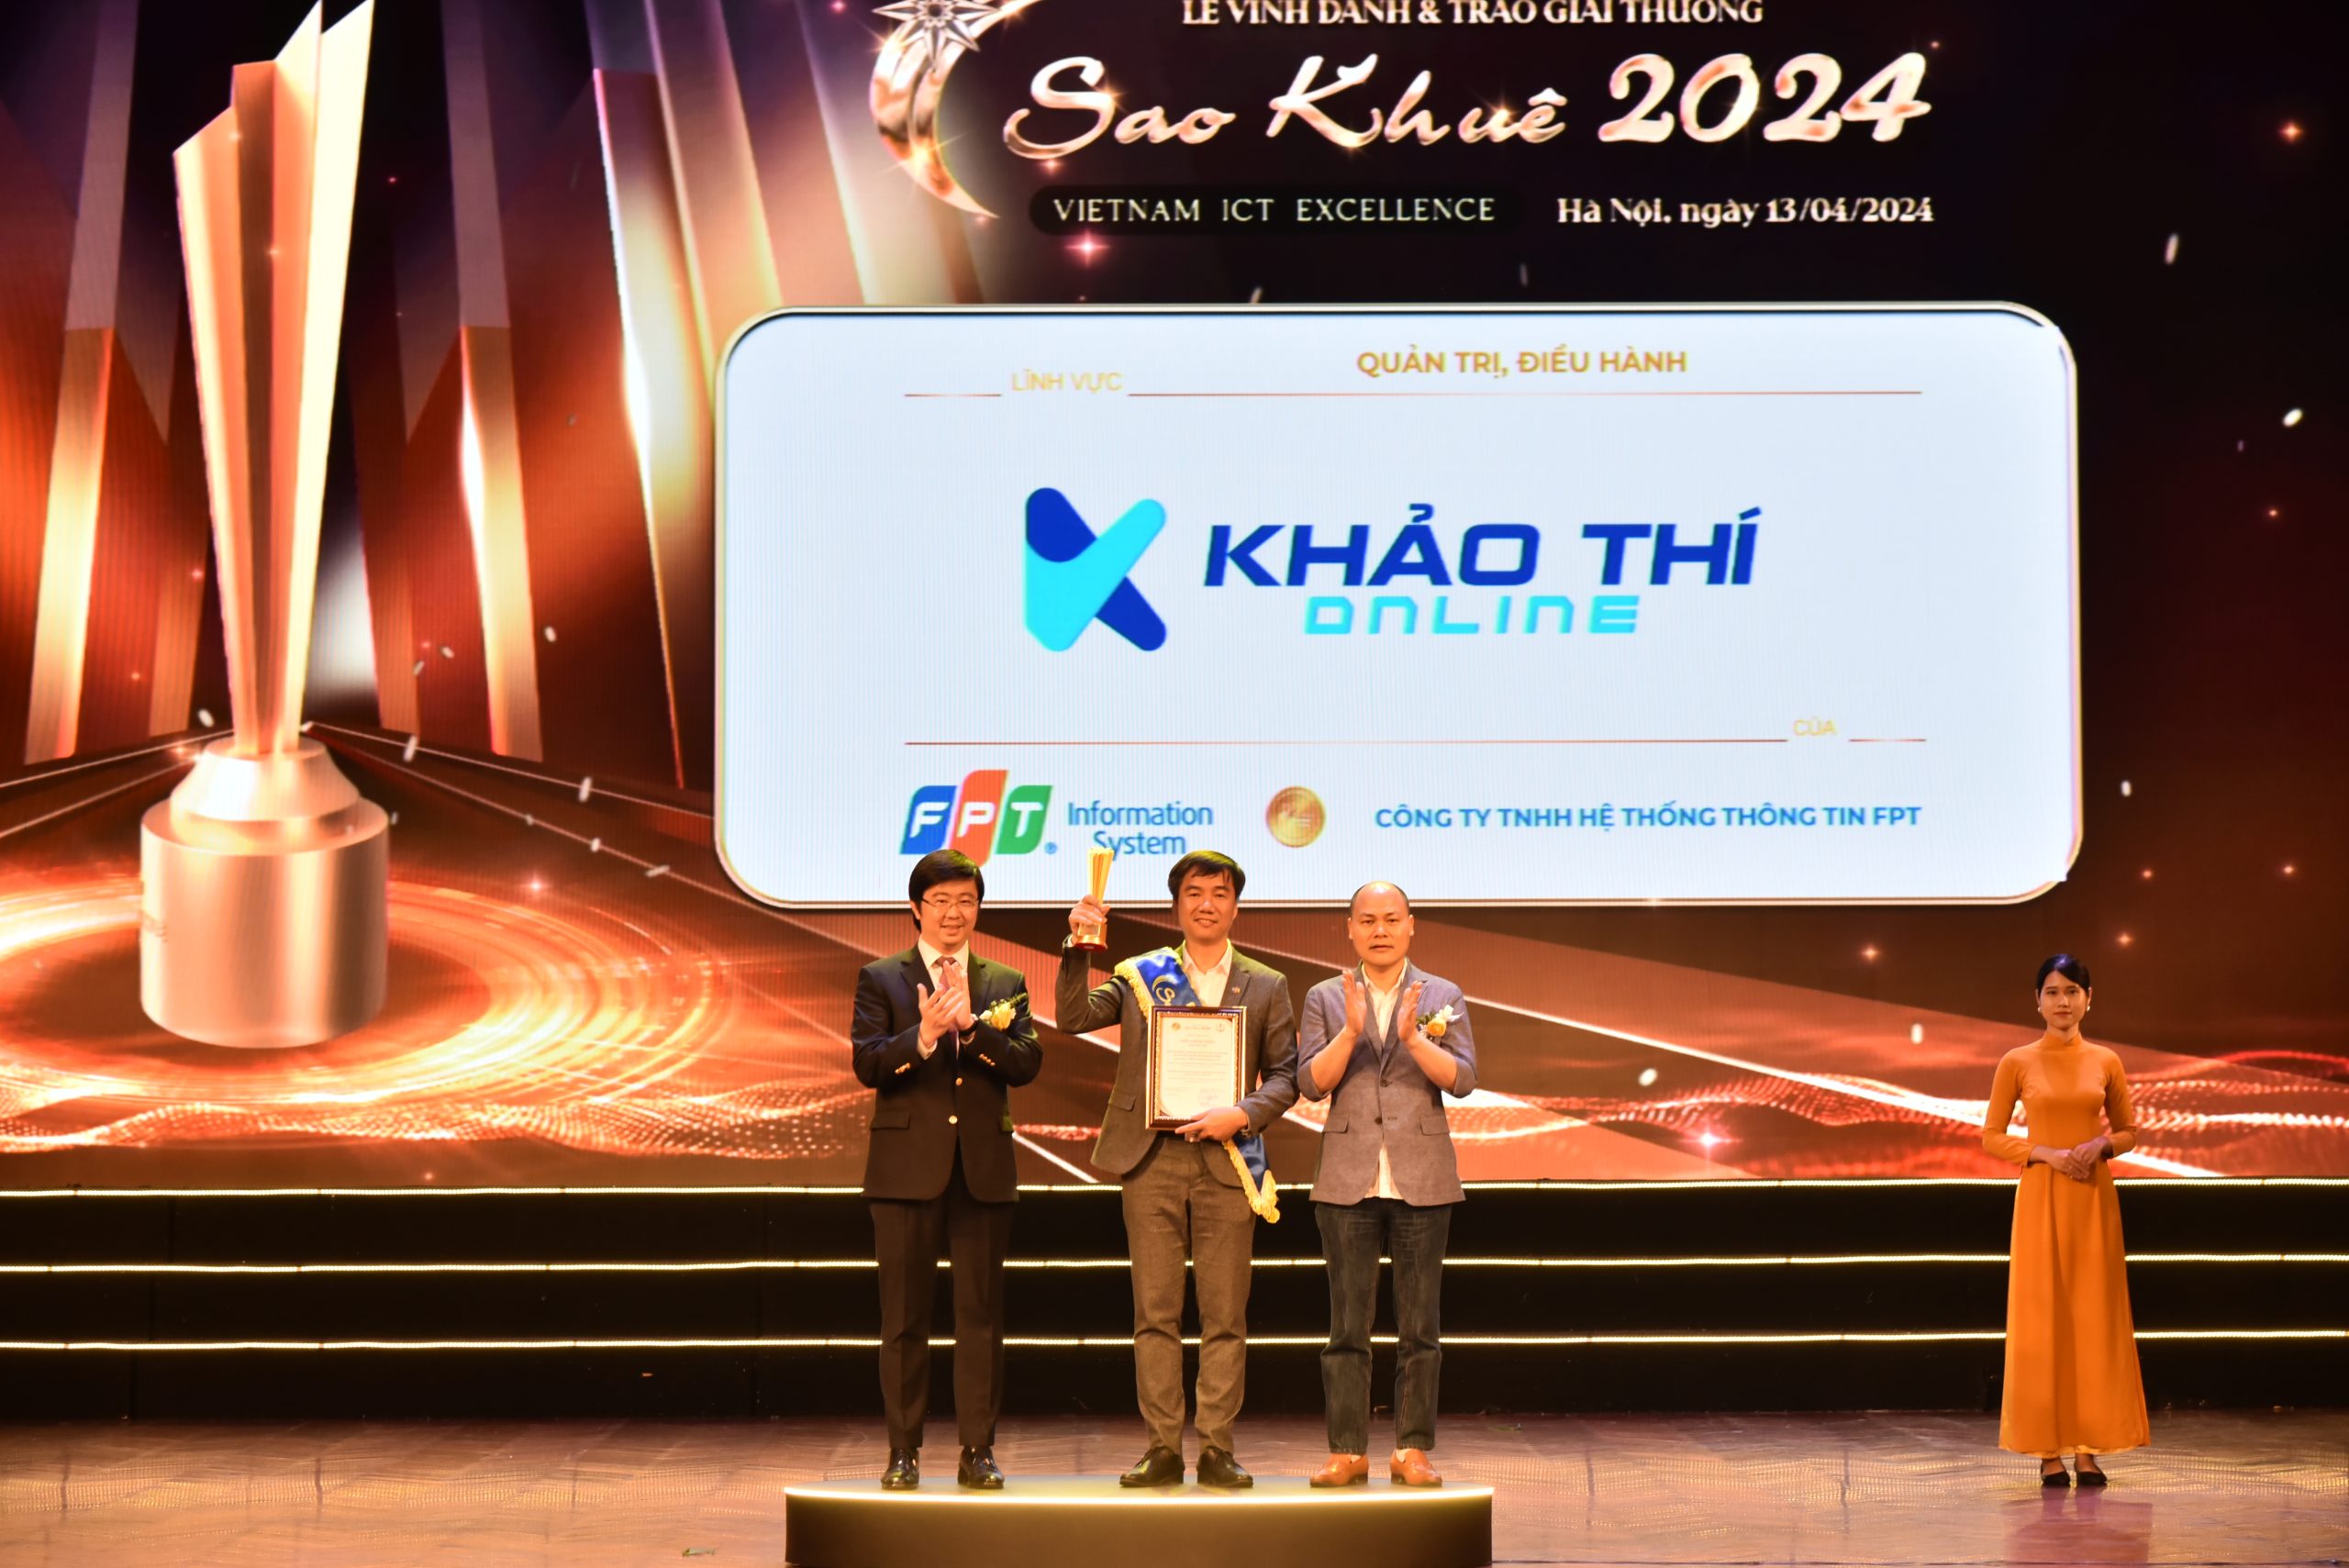 2024 Sao Khue Awards (Vietnam ICT Excellence) – Formative Assessment And Testing Platform For K-12 (Khaothi.Online)